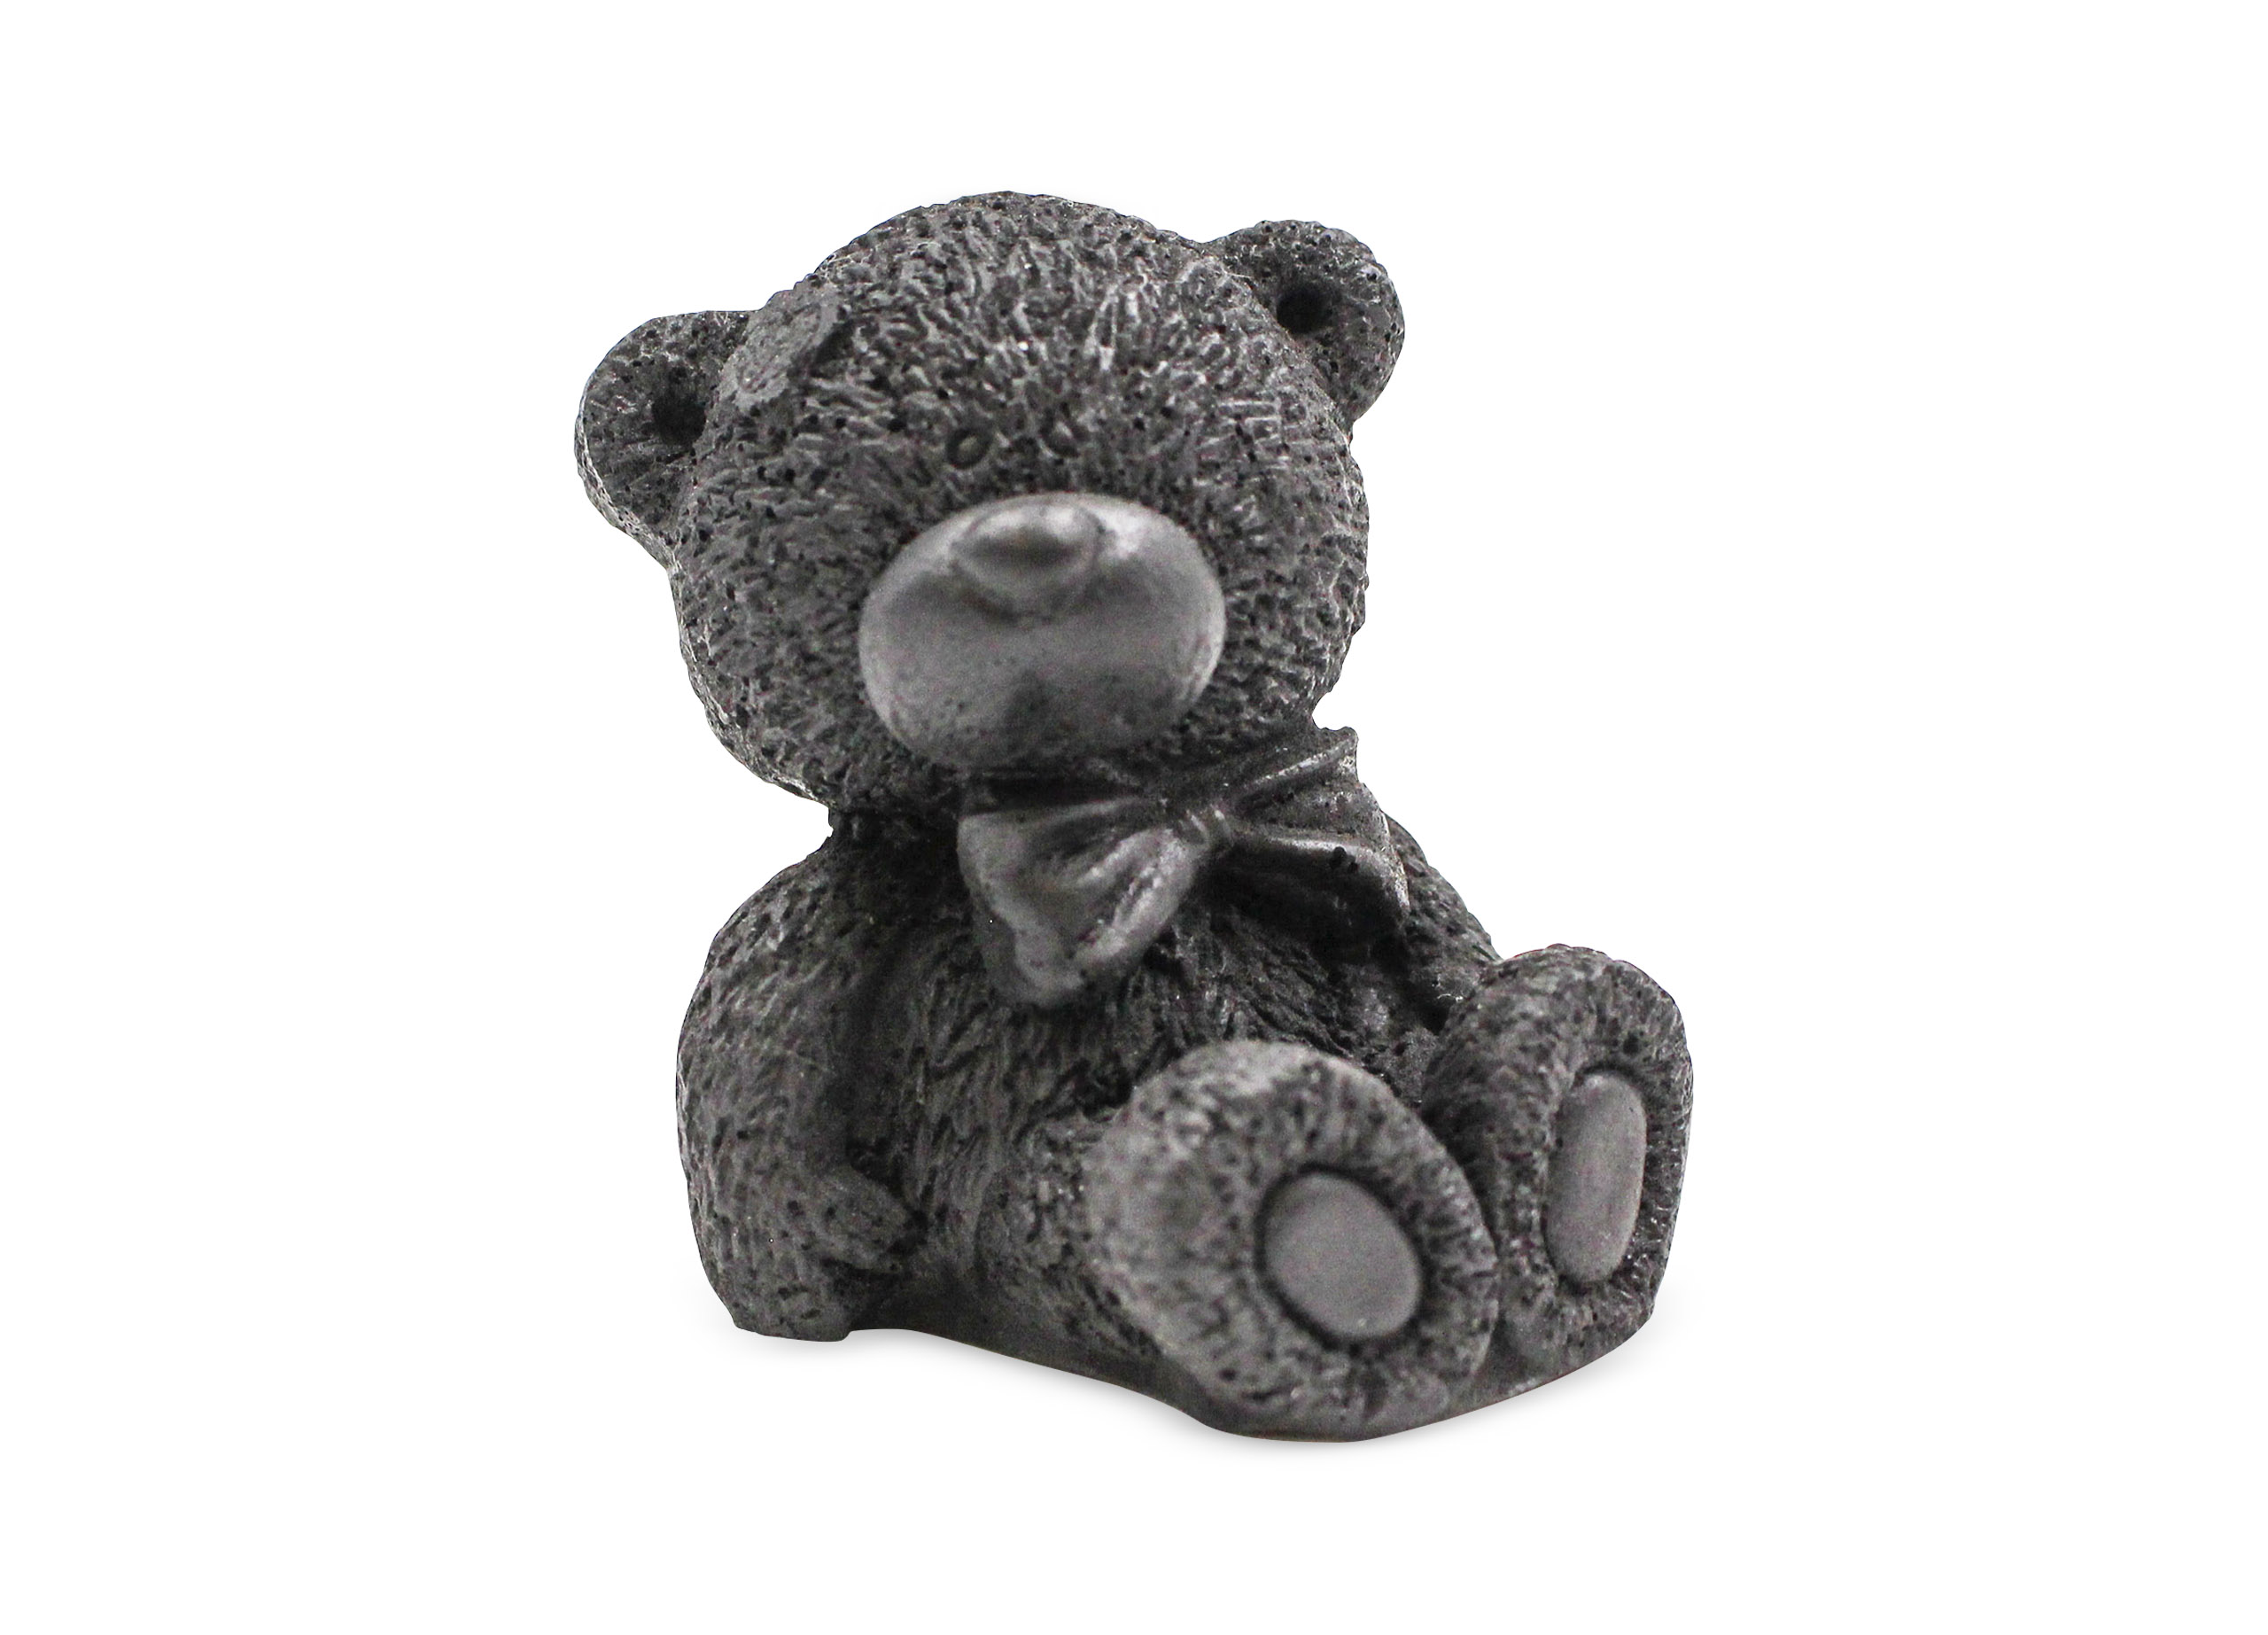 Shungite Teddy Bear Figurines - Crystal Dreams